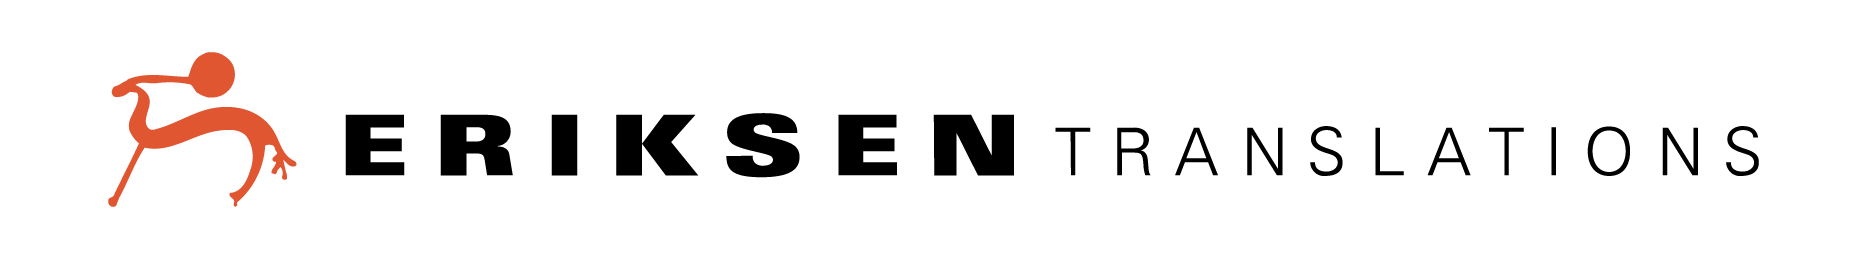 Eriksen logo